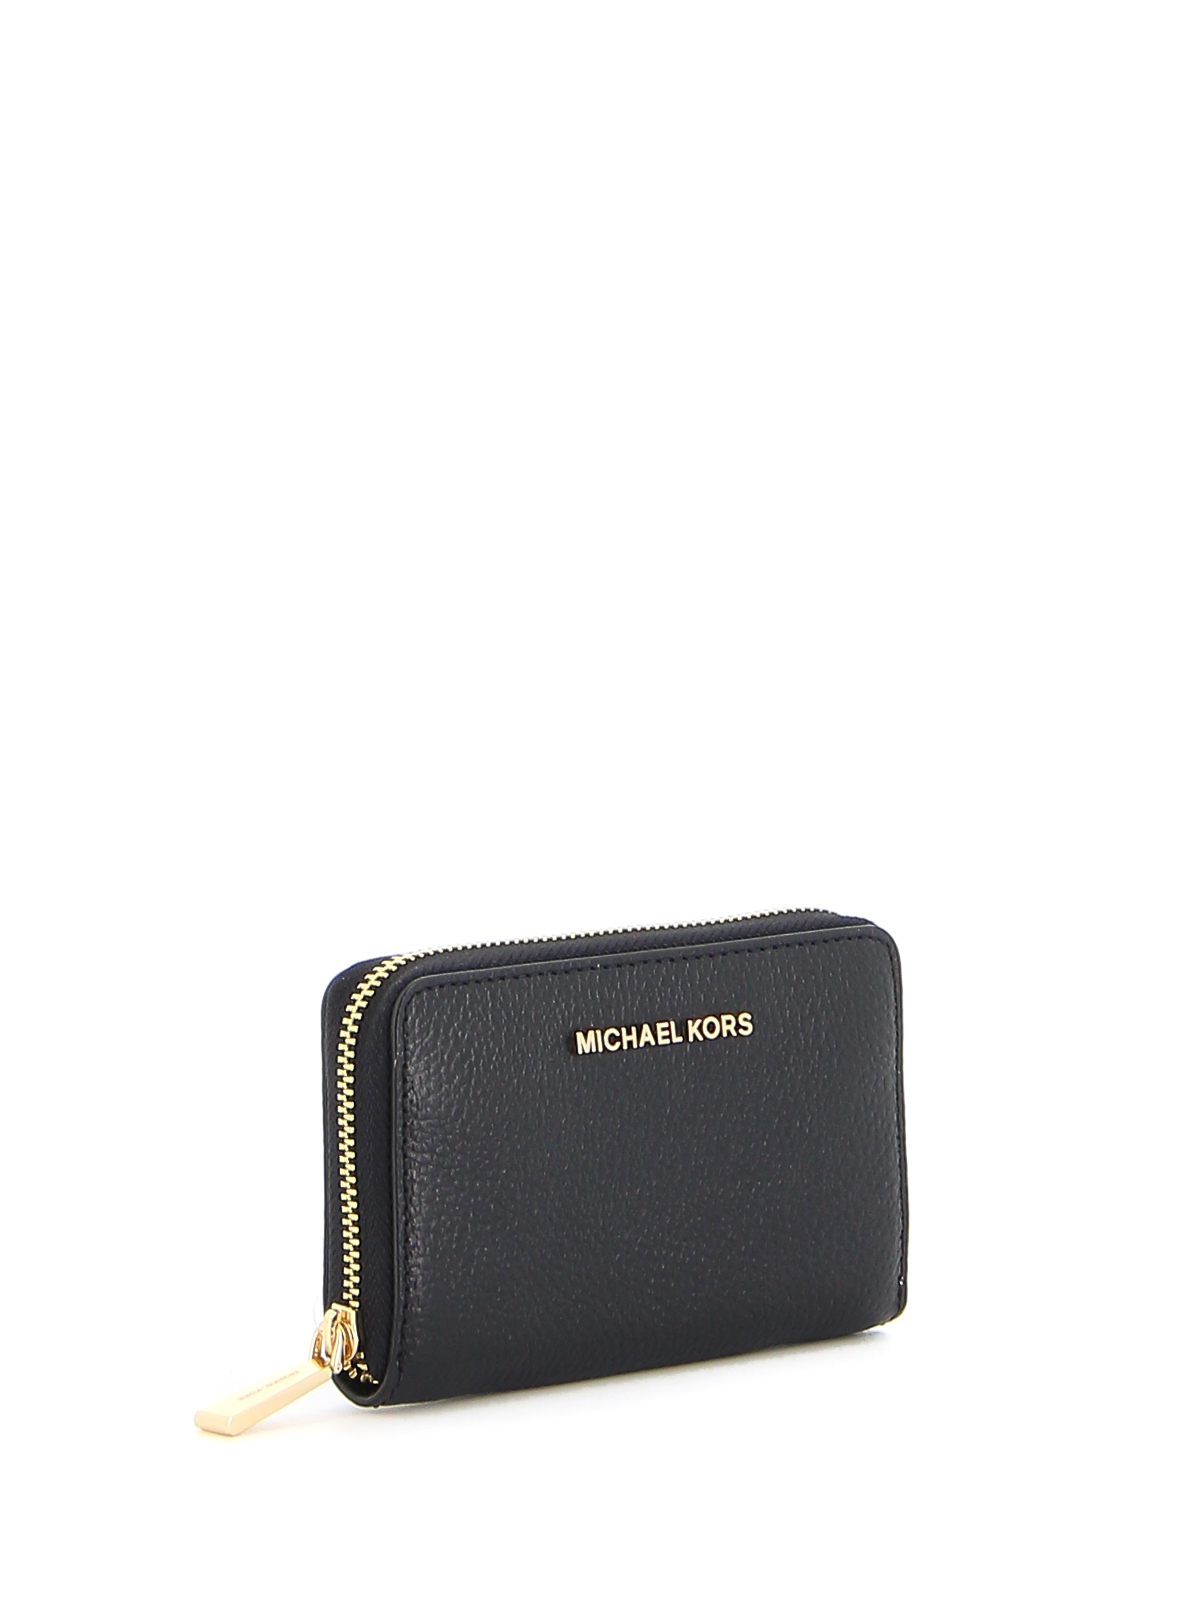 Michael Kors - Jet Set small wallet - wallets & purses - 34H9GJ6D0L001